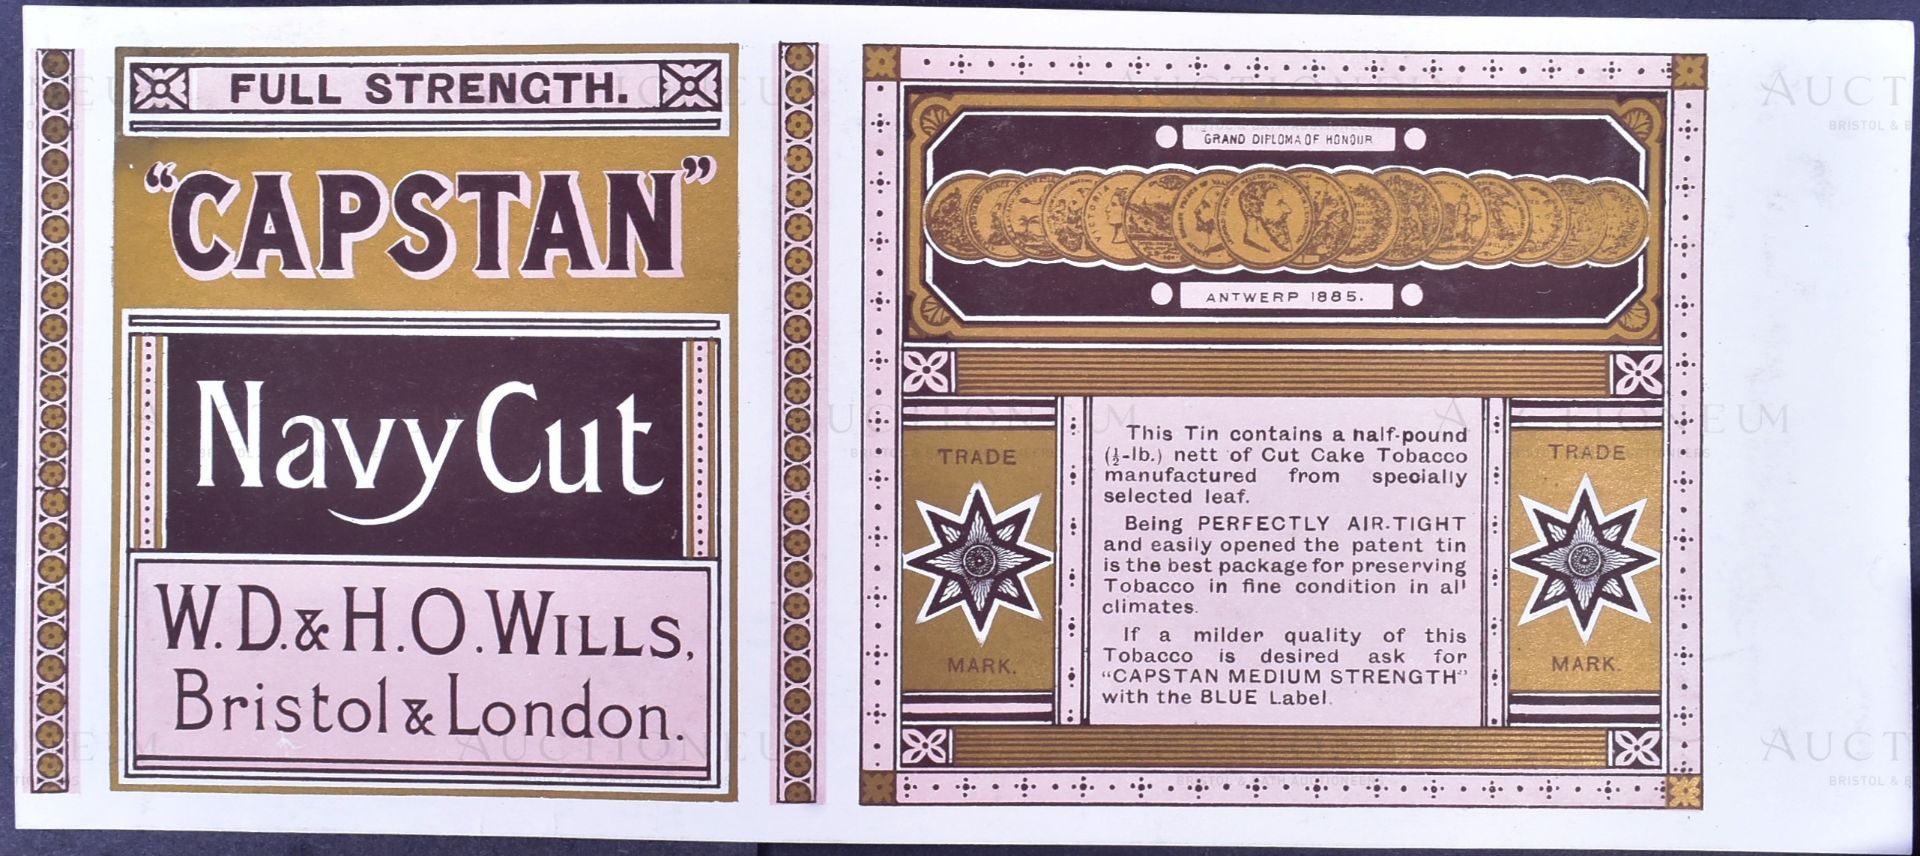 MARDON, SON & HALL - 19TH & 20TH CENTURY TOBACCO PACKET / LABEL DESIGNS - Image 4 of 7